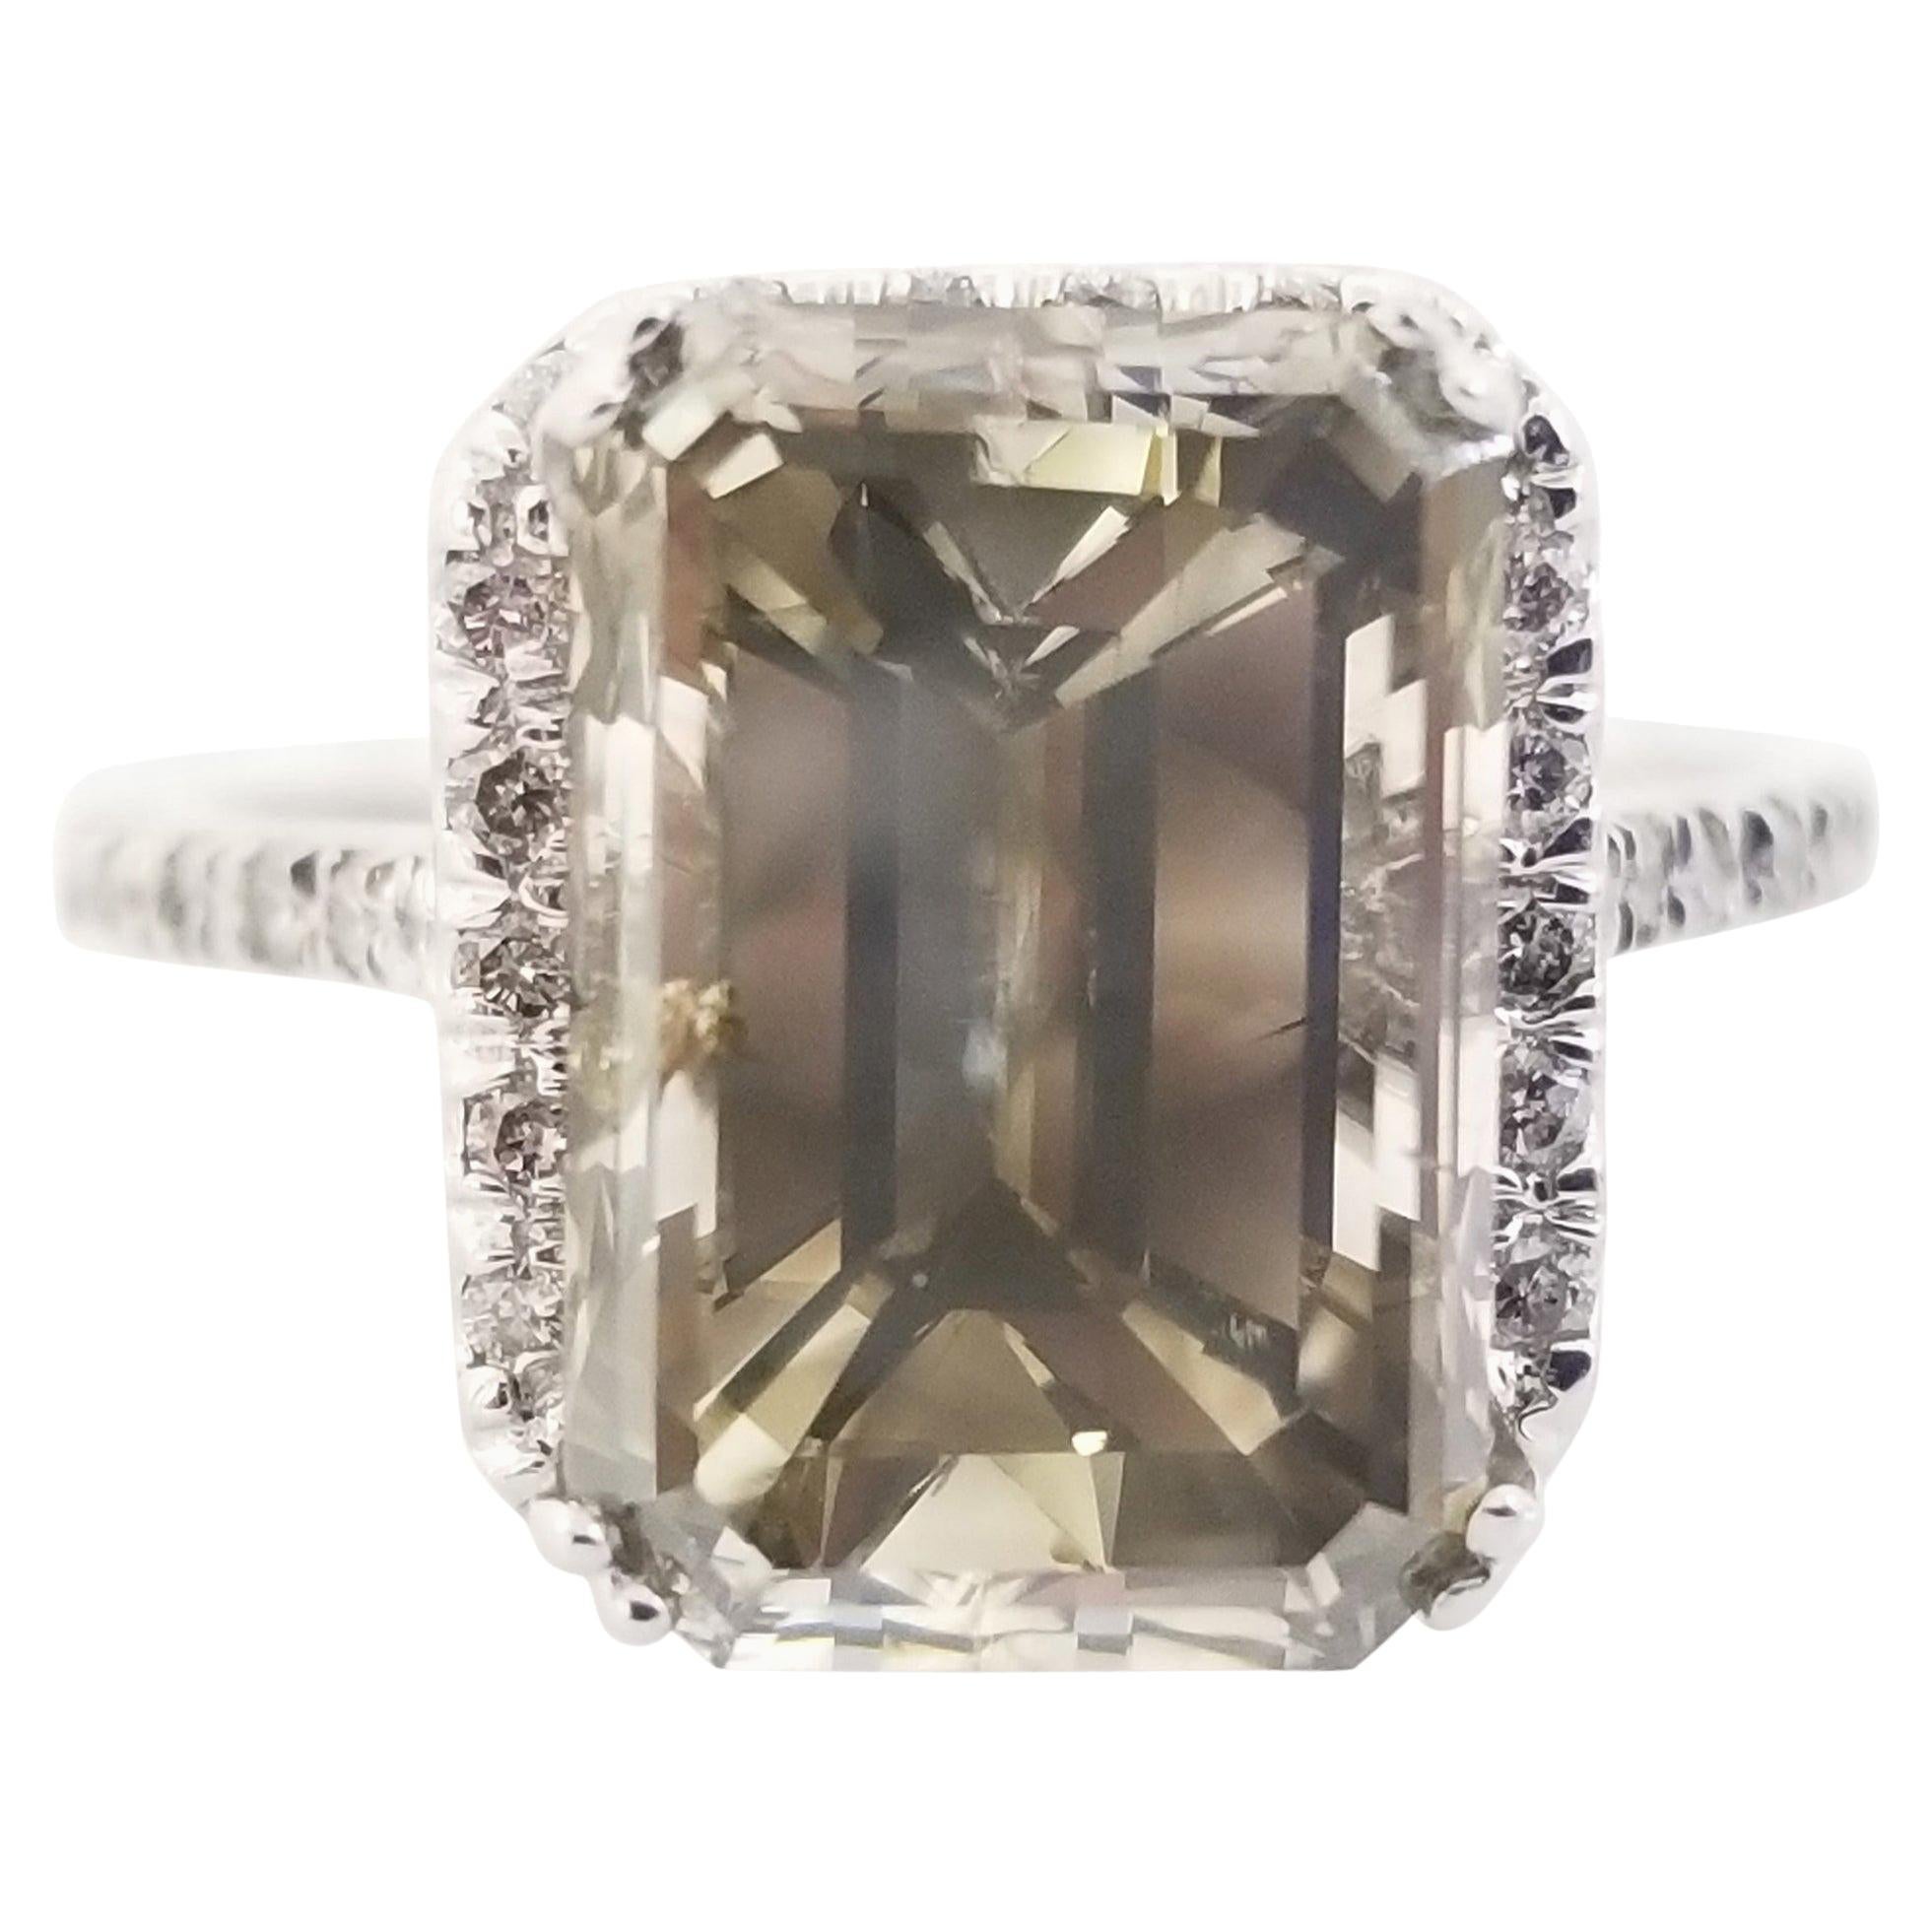 IGI 5.51 Carat Emerald Cut Fancy Gray Diamond Ring White Gold 14 Karat